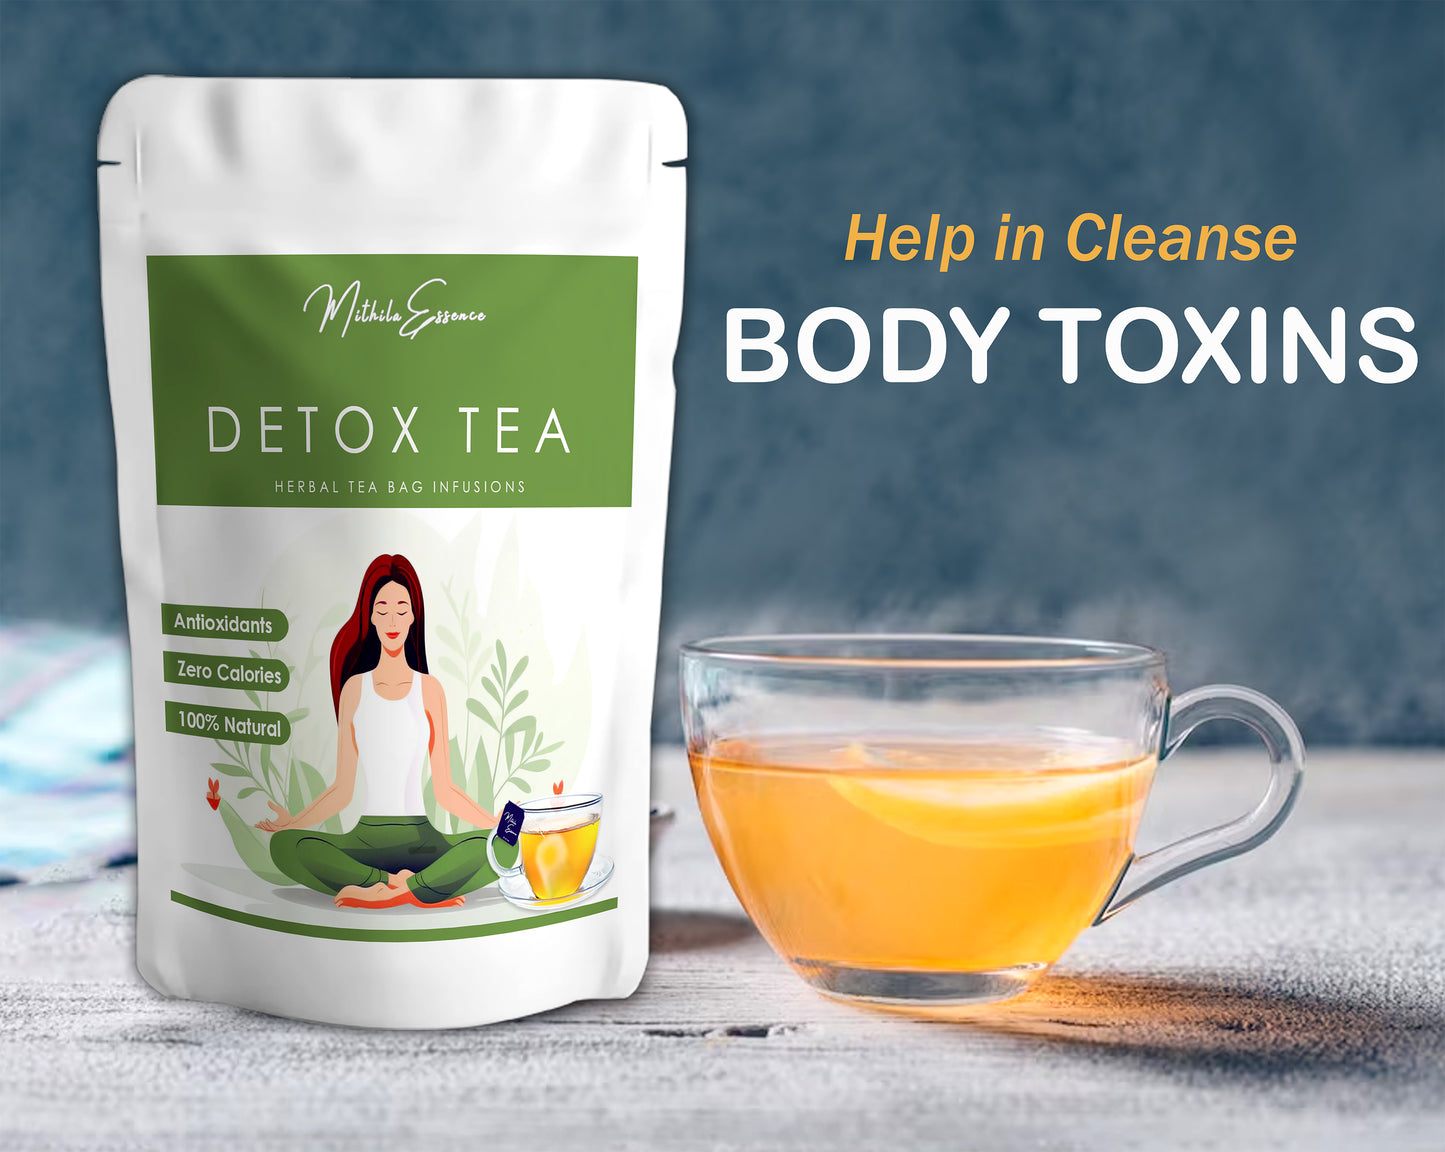 MITHILA ESSENCE TEA- HERBAL DETOX TEA BAGS | Improve Digestion & Detoxification | 100% Natural Herbs | Nylon Free Tea Bags